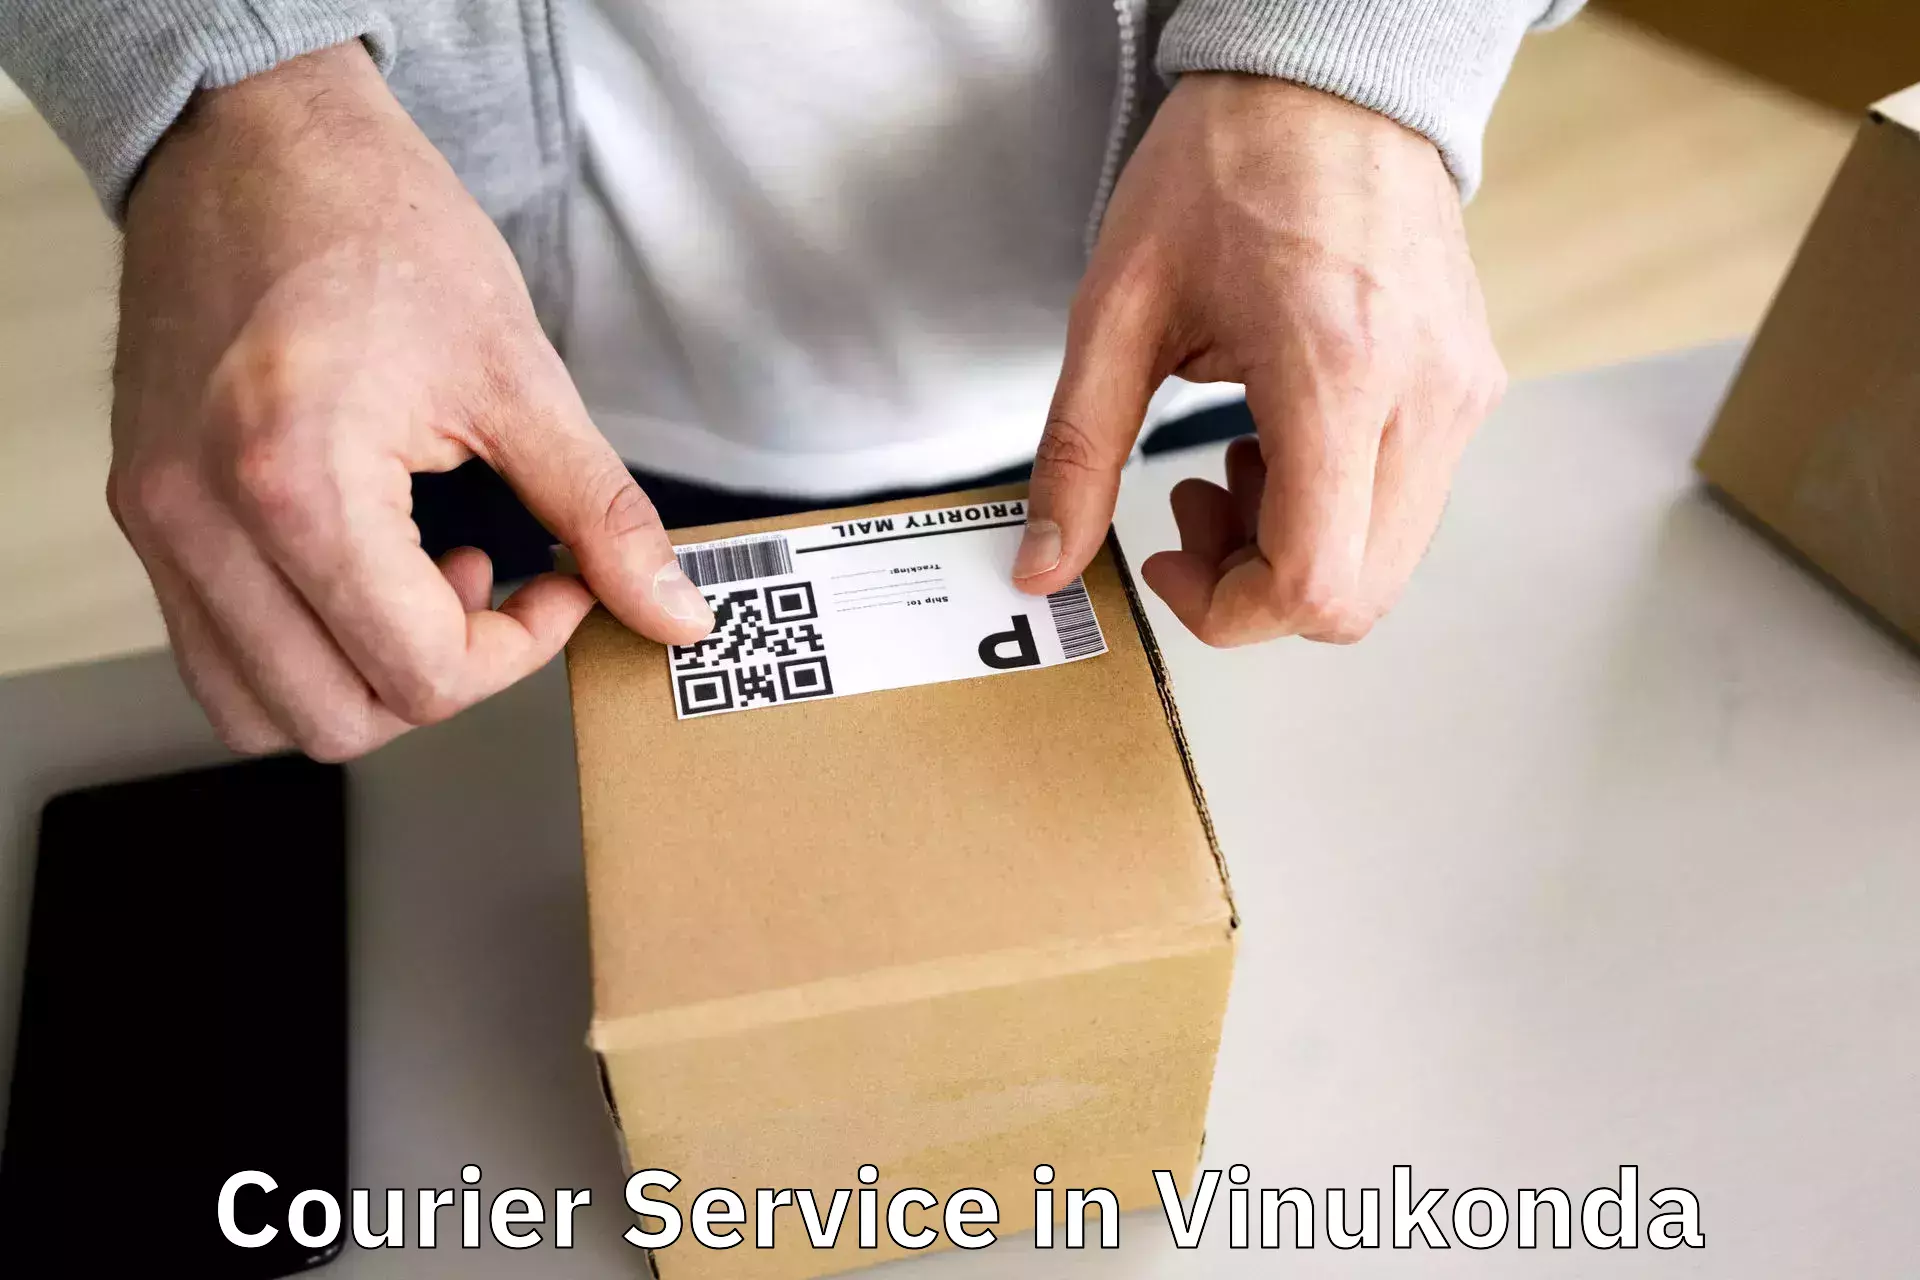 Customer-focused courier in Vinukonda